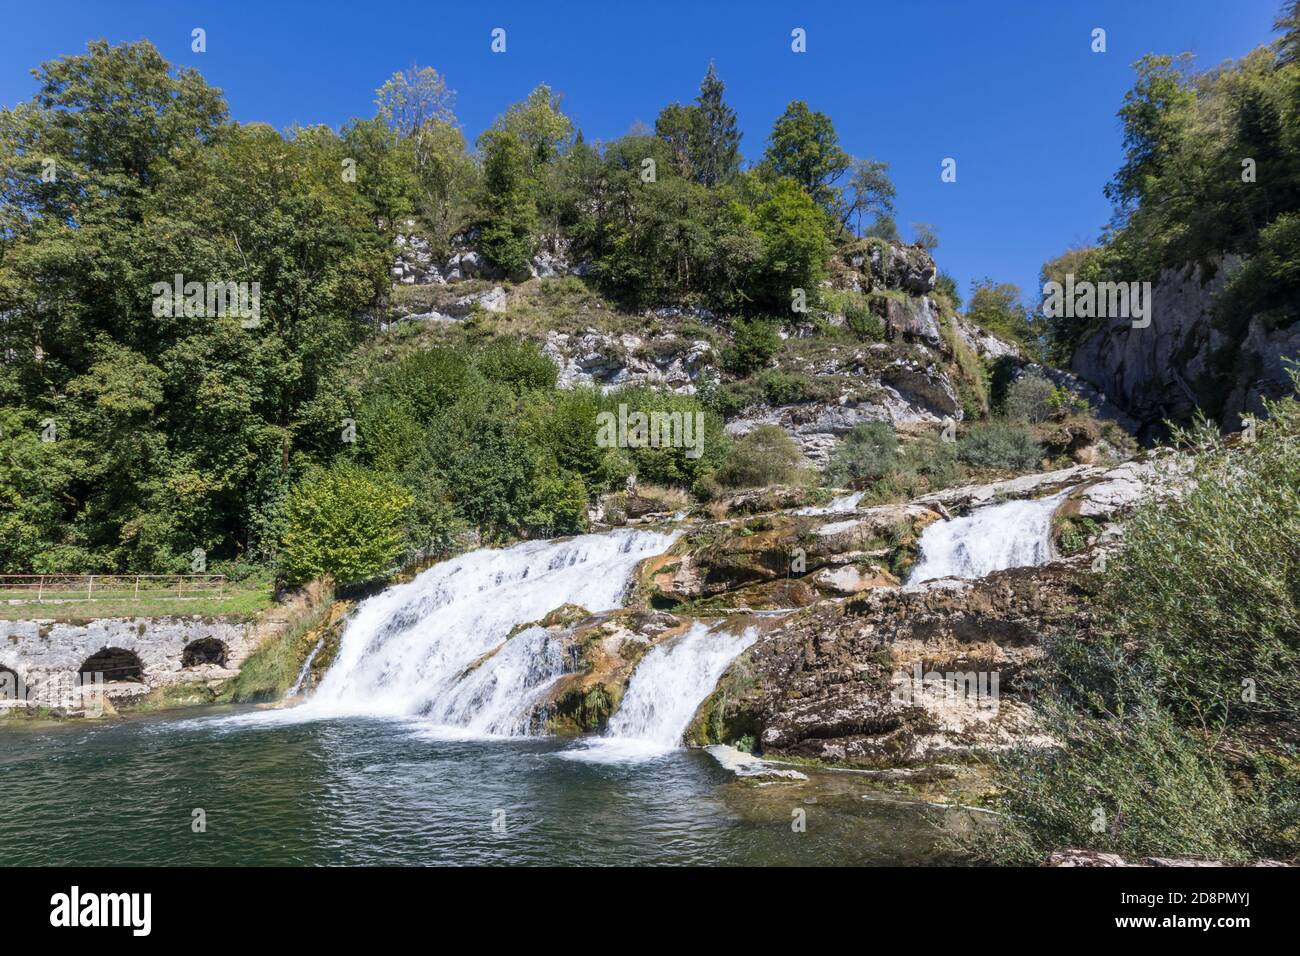 Sentier de randonnée des Pertes de l'Ain, pertes de l'Ain, Jura en France Banque D'Images